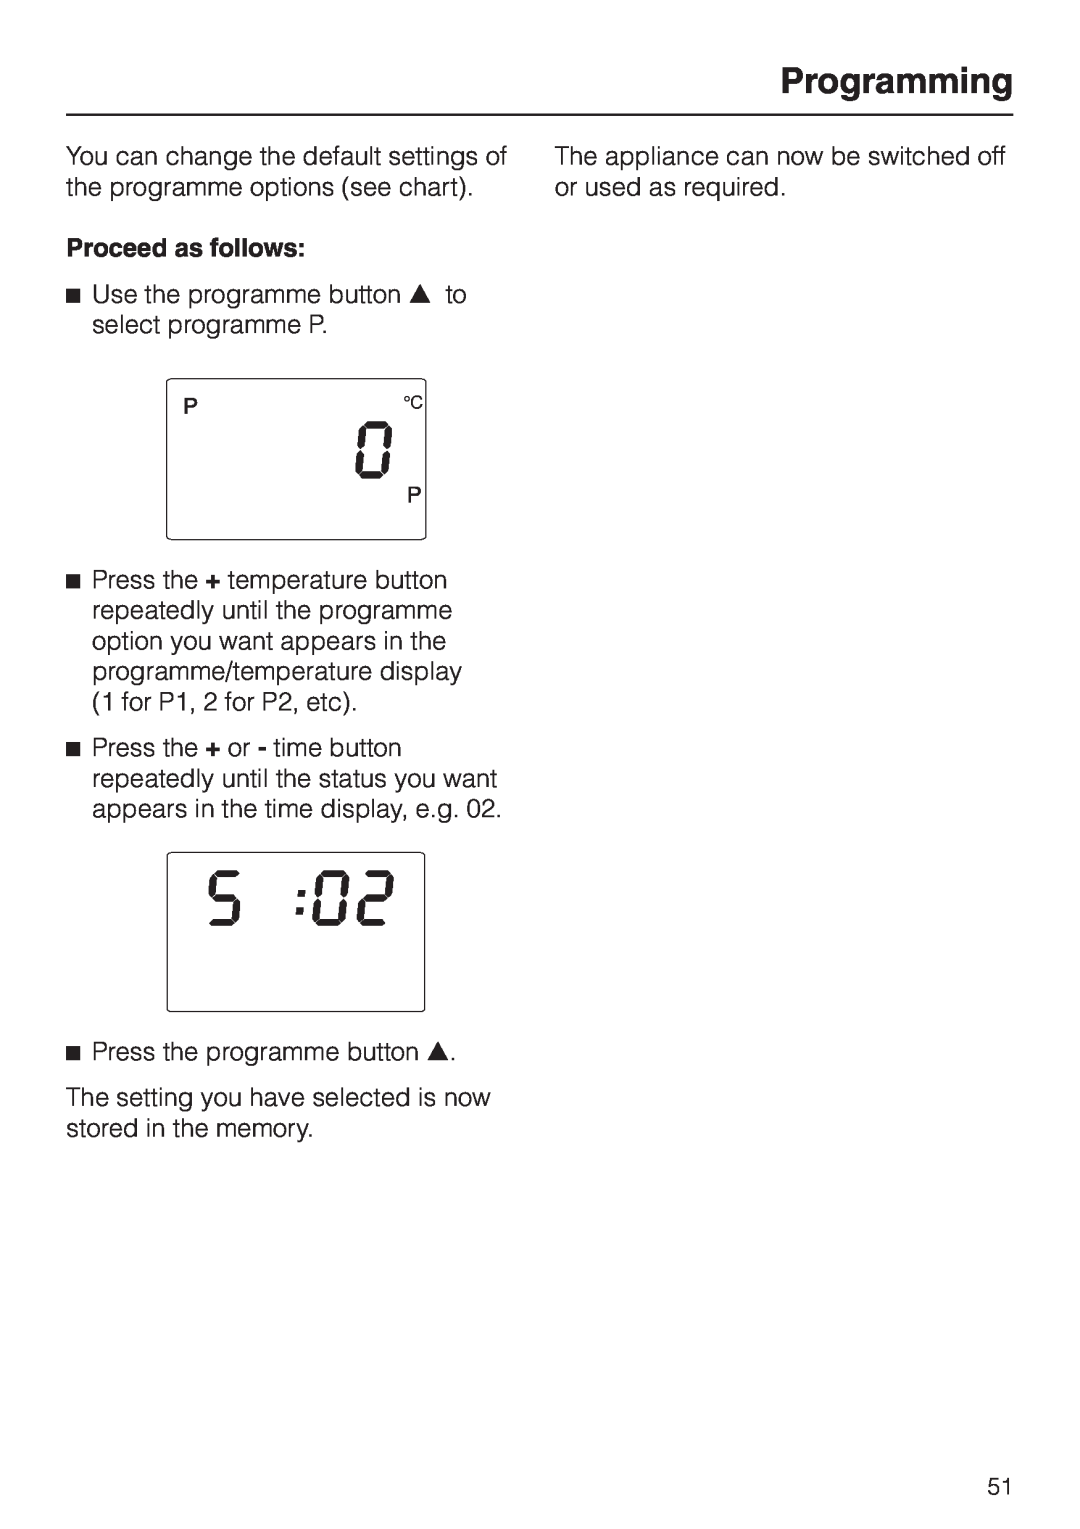 Miele DG 4064 L manual Programming, Use the programme button - to select programme P 